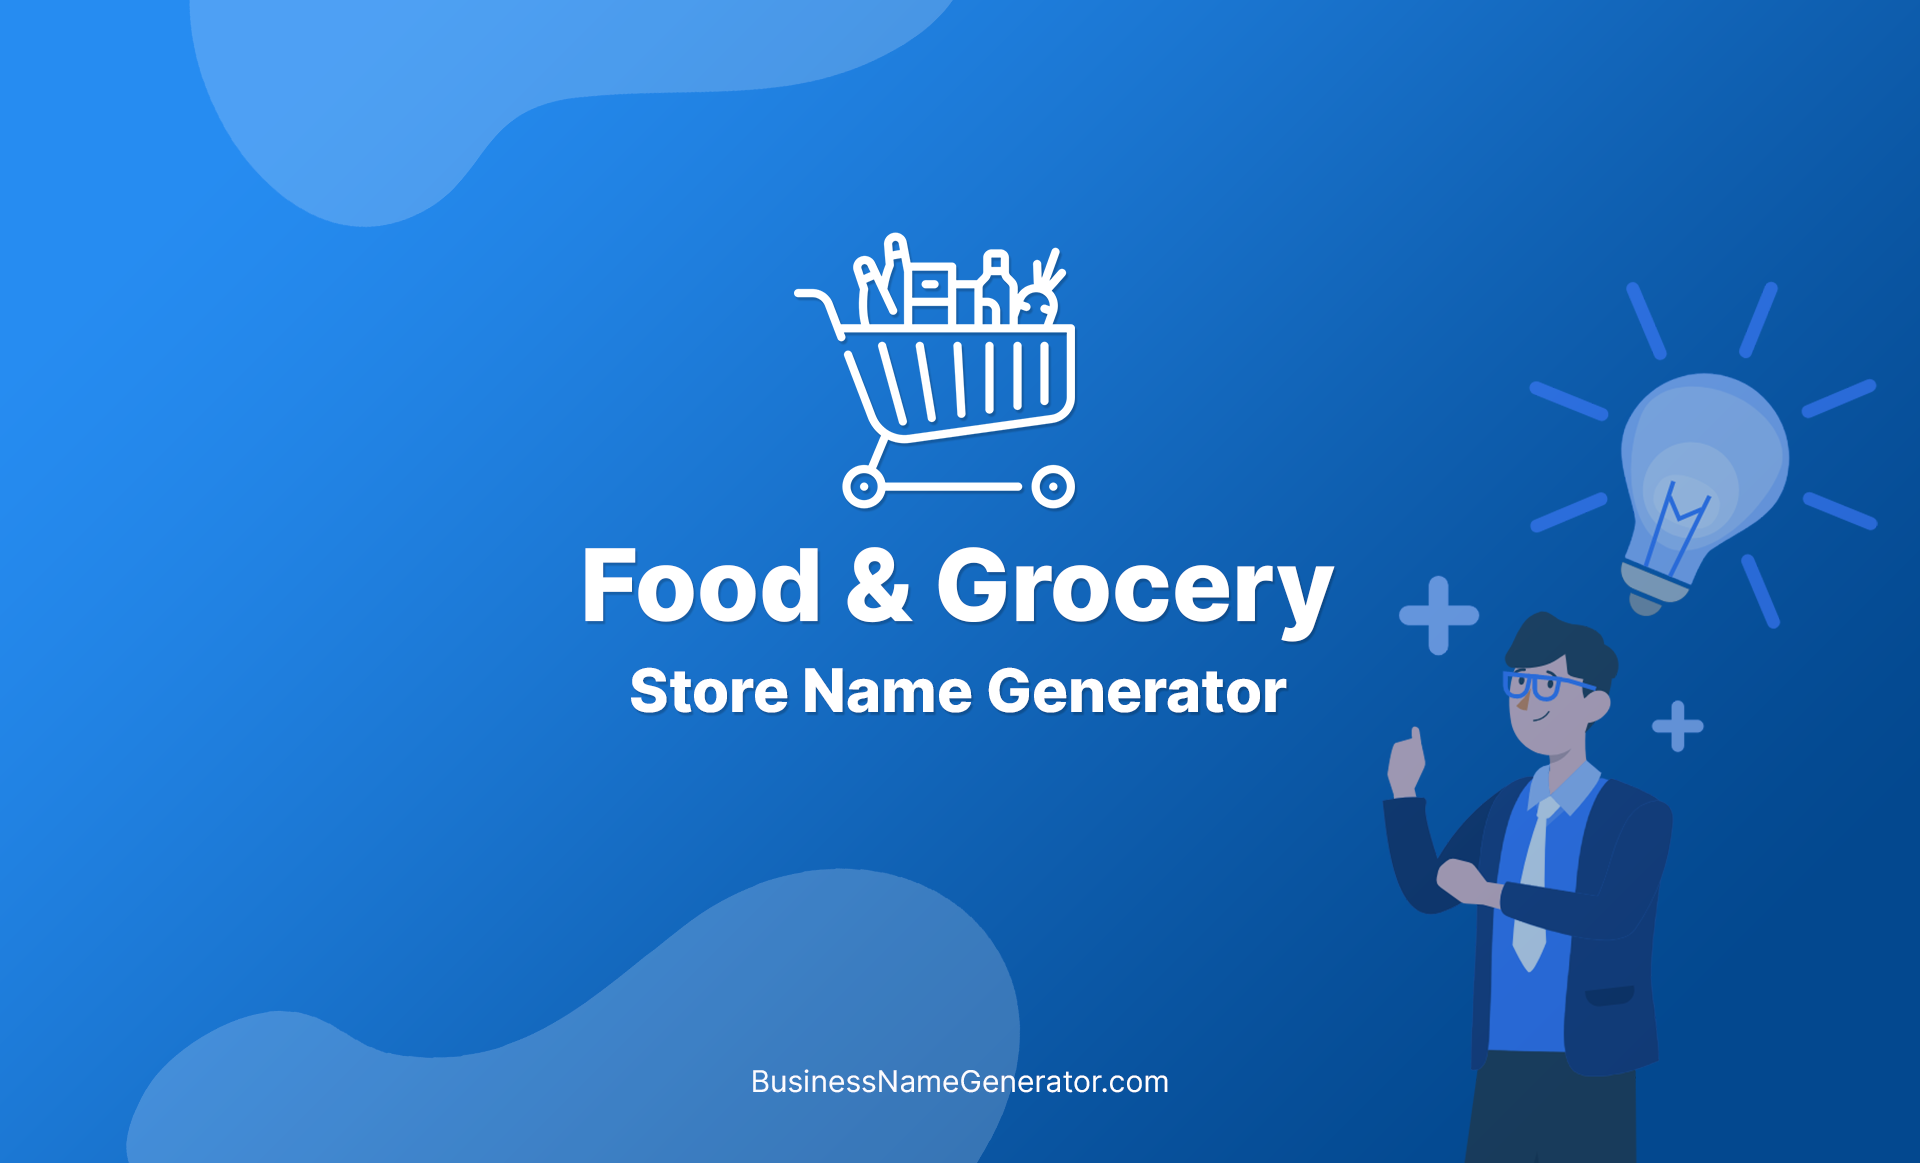 Food & Grocery Store Name Generator